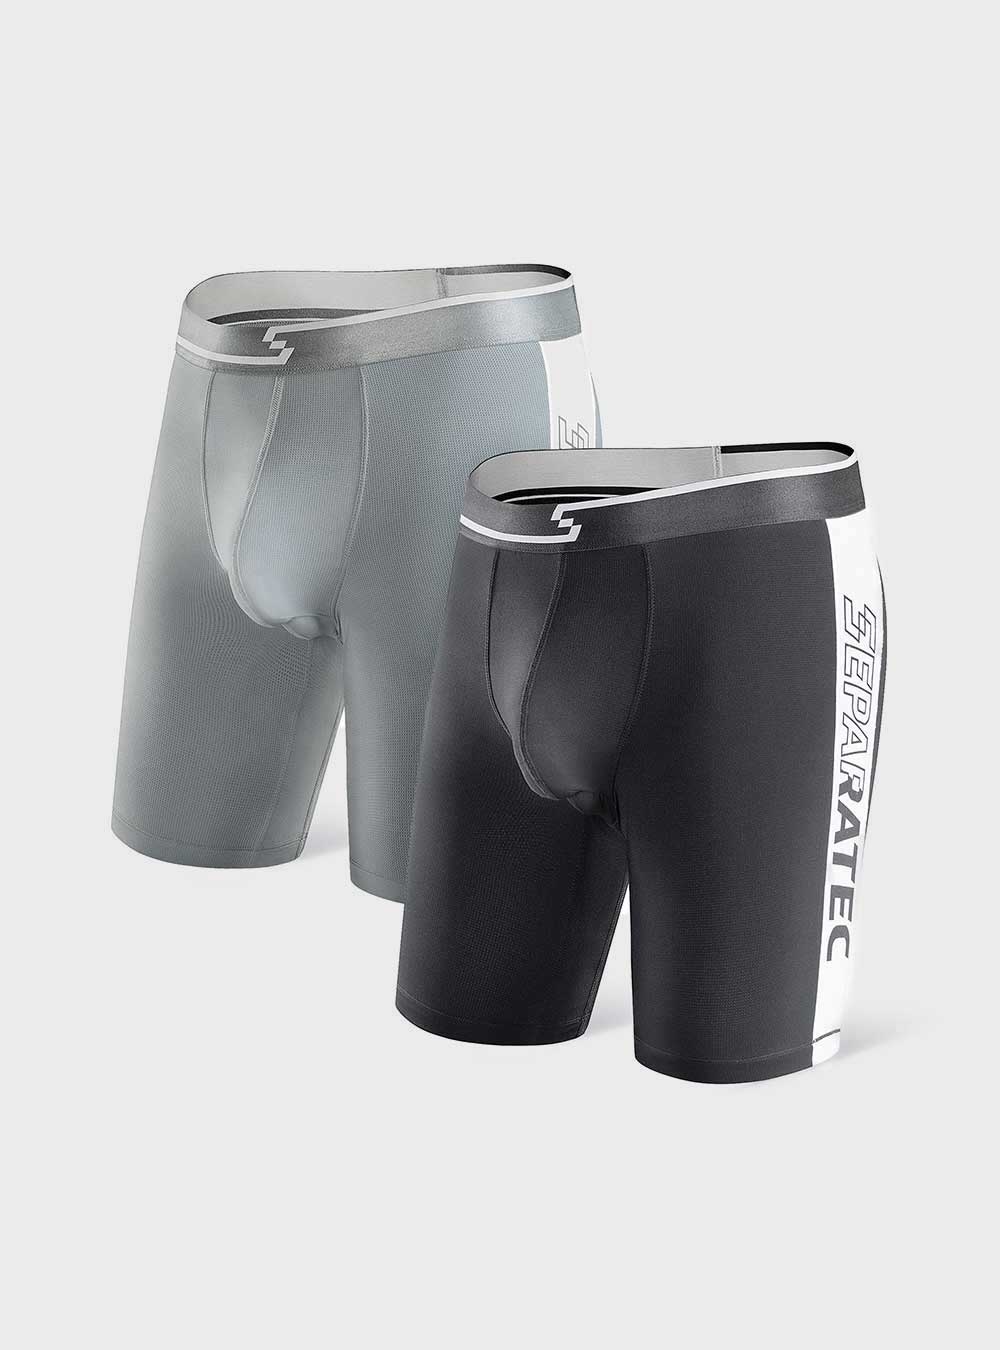  Separatec Dual Pouch Mens Underwear Quick Dry Boxer